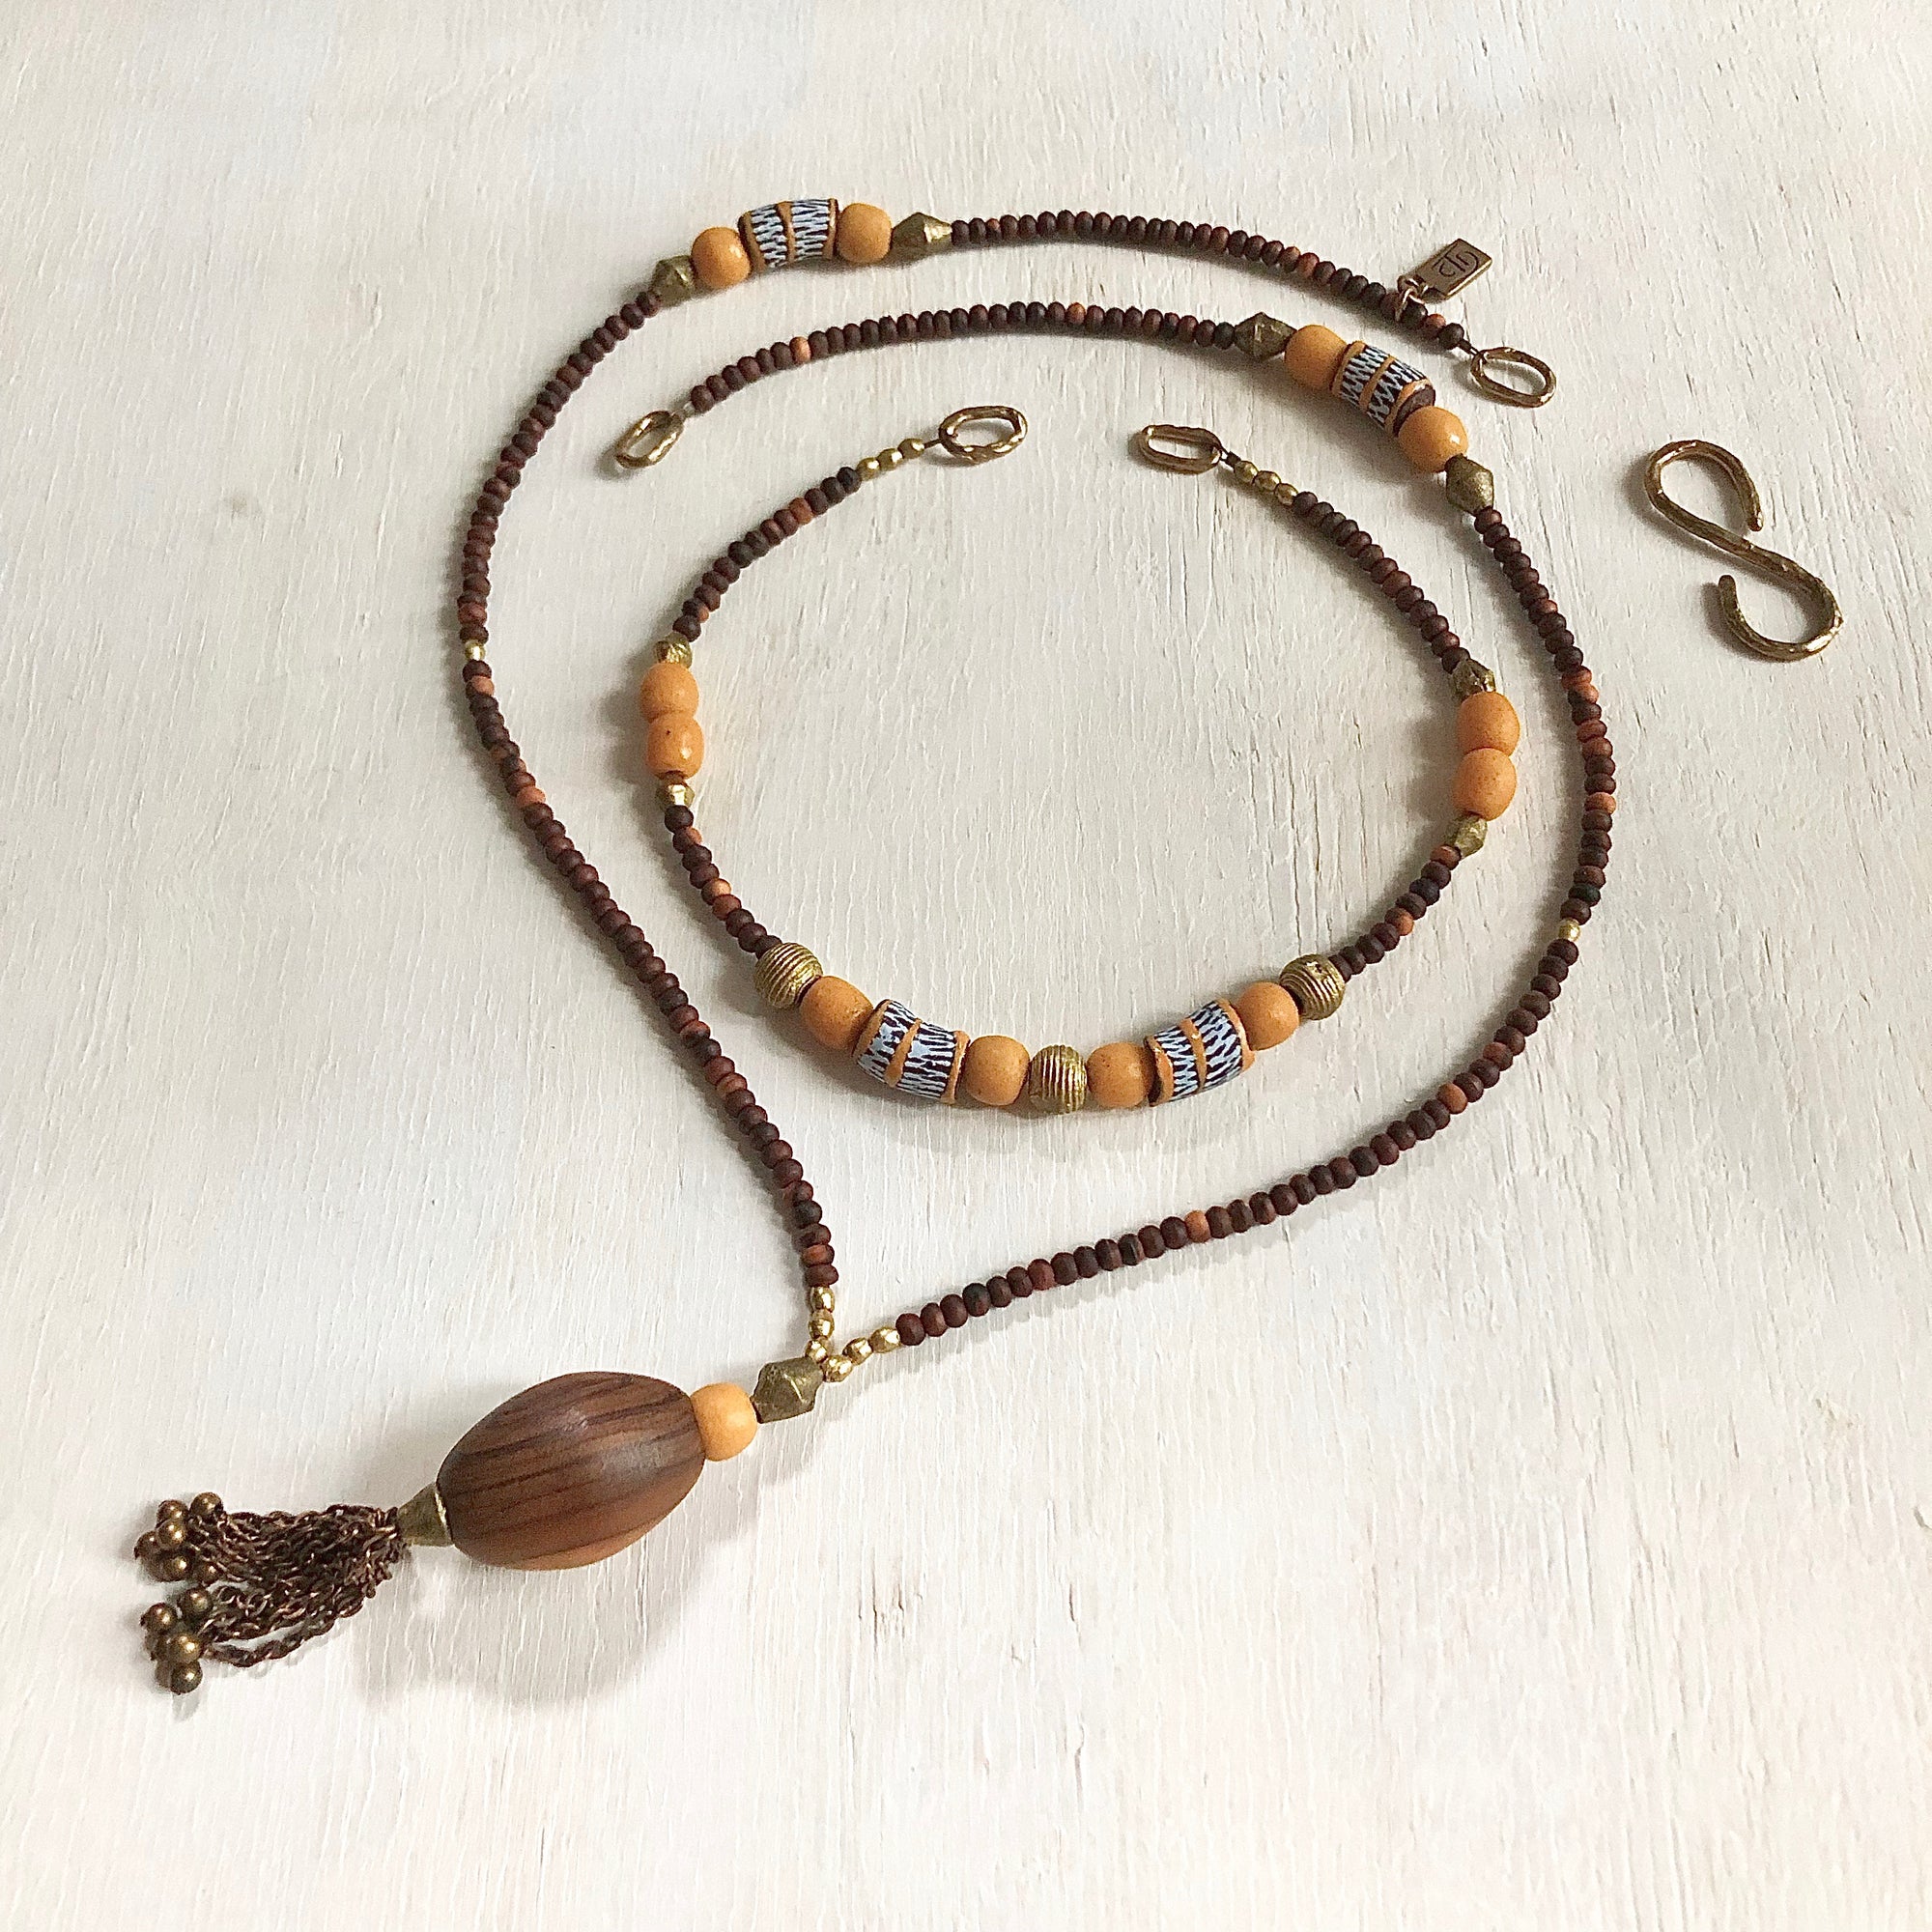 braids wooden beads #beads #woodenbeads #aliciakeys #cleopatrabraids  #braidedjewelry